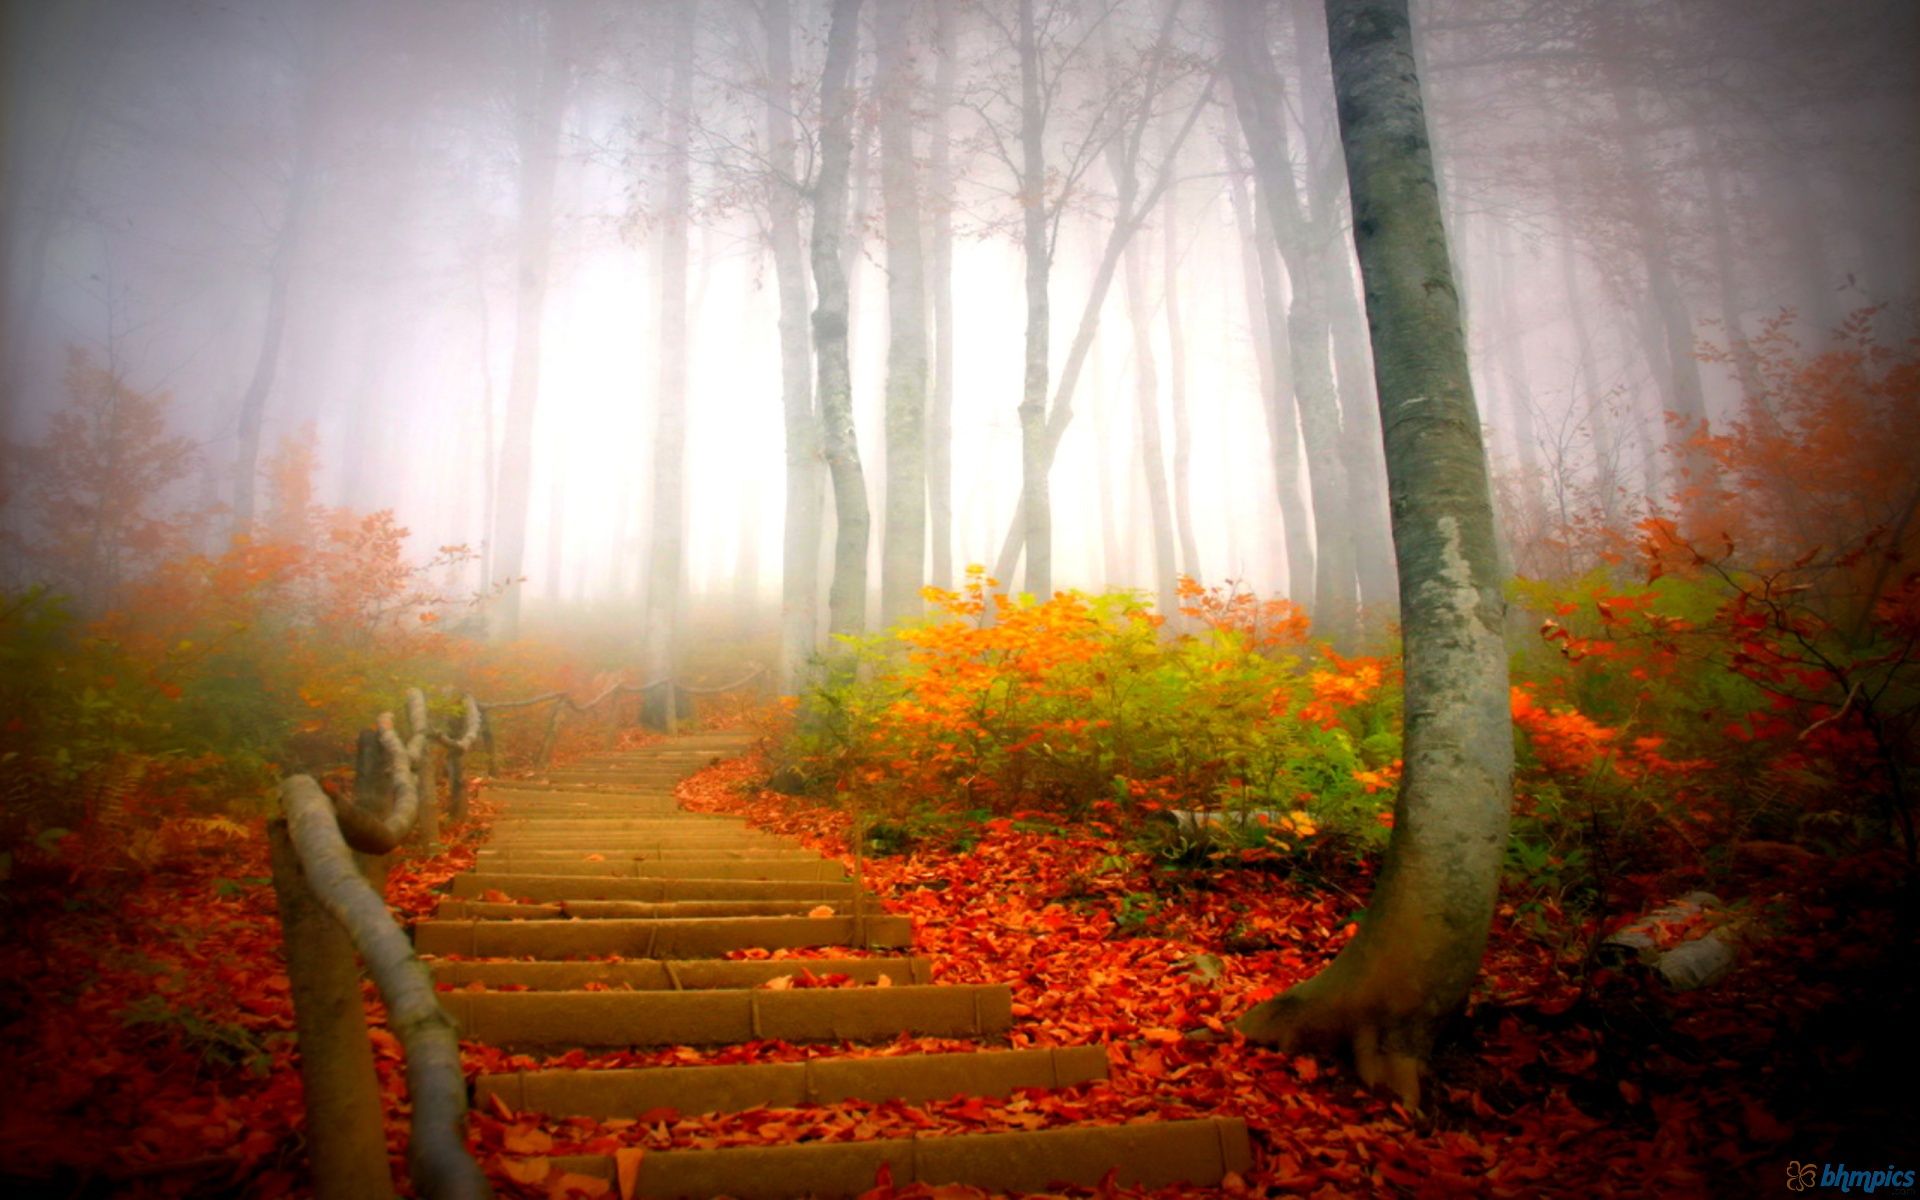 Fog #Nature. Autumn forest, Fall picture, Autumn scenes